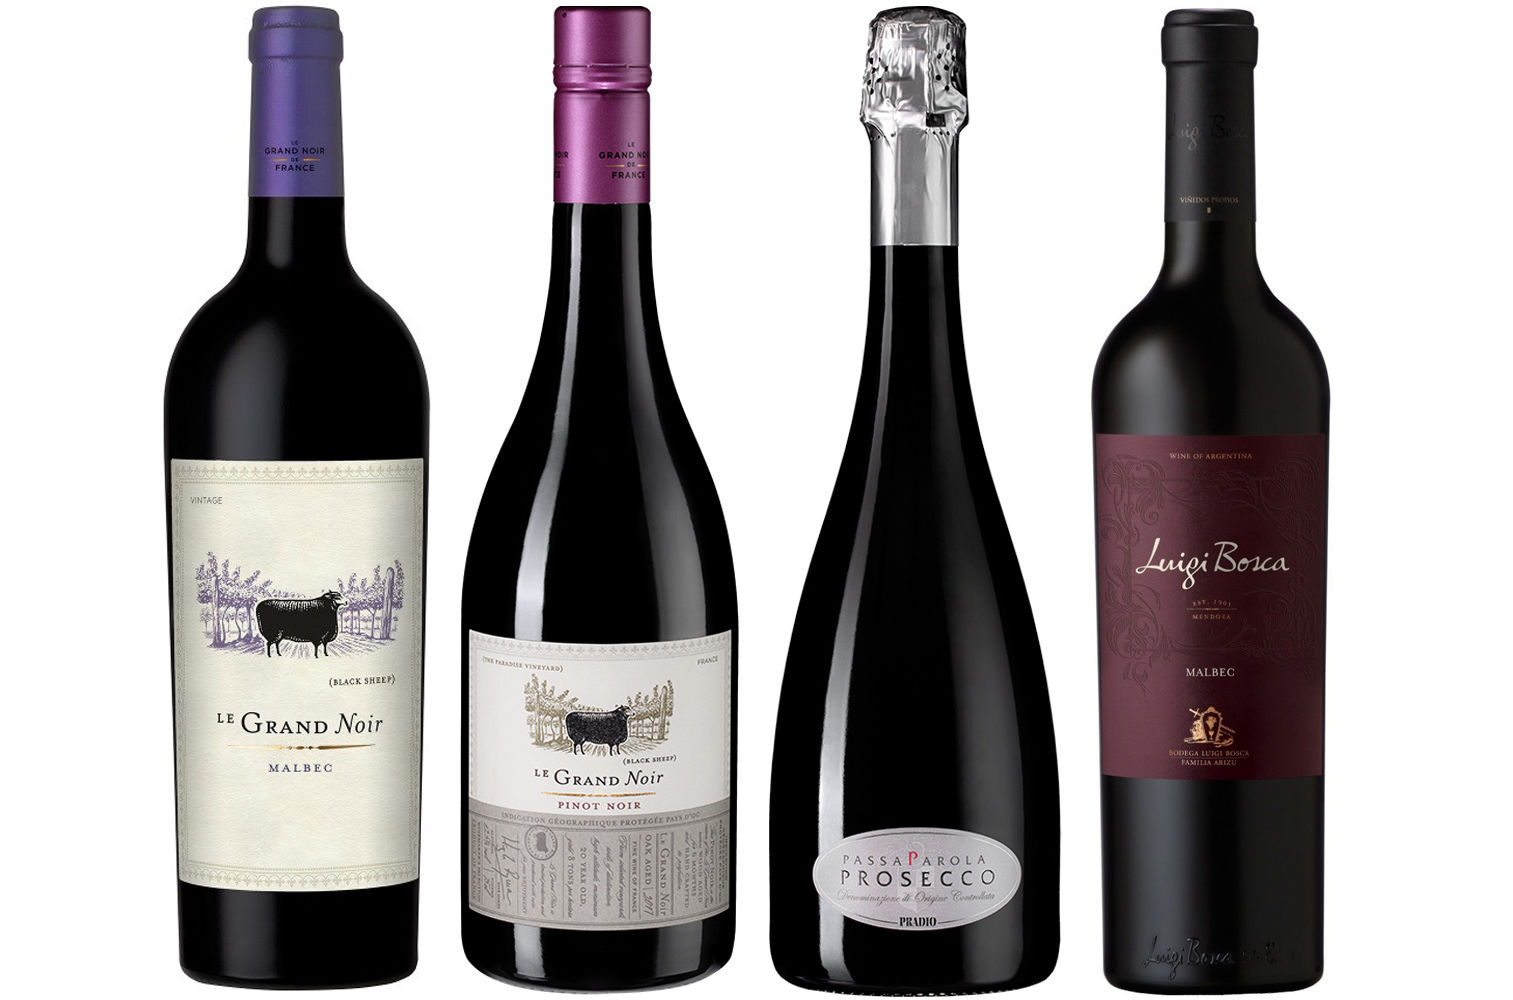 Слева направо: Grand Noir Malbec; Grand Noir Pinot Noir; Pradio Passaparola Prosecco; Luigi Bosca Malbec